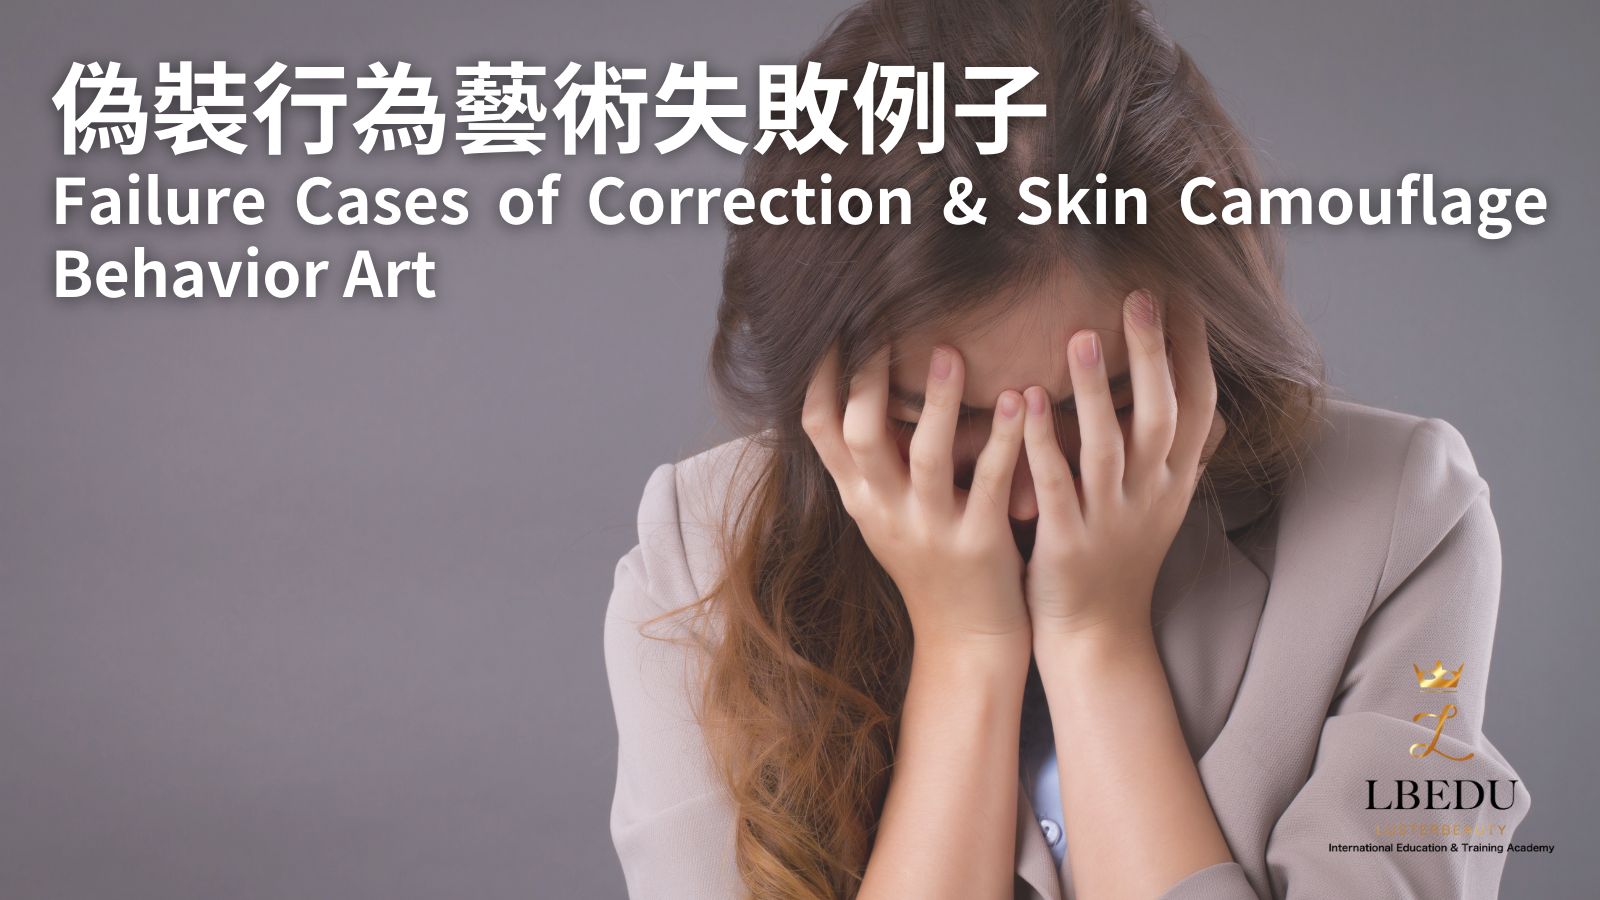 Failure Case of Correction, Skin Camouflage and Restoration, Behavior Art